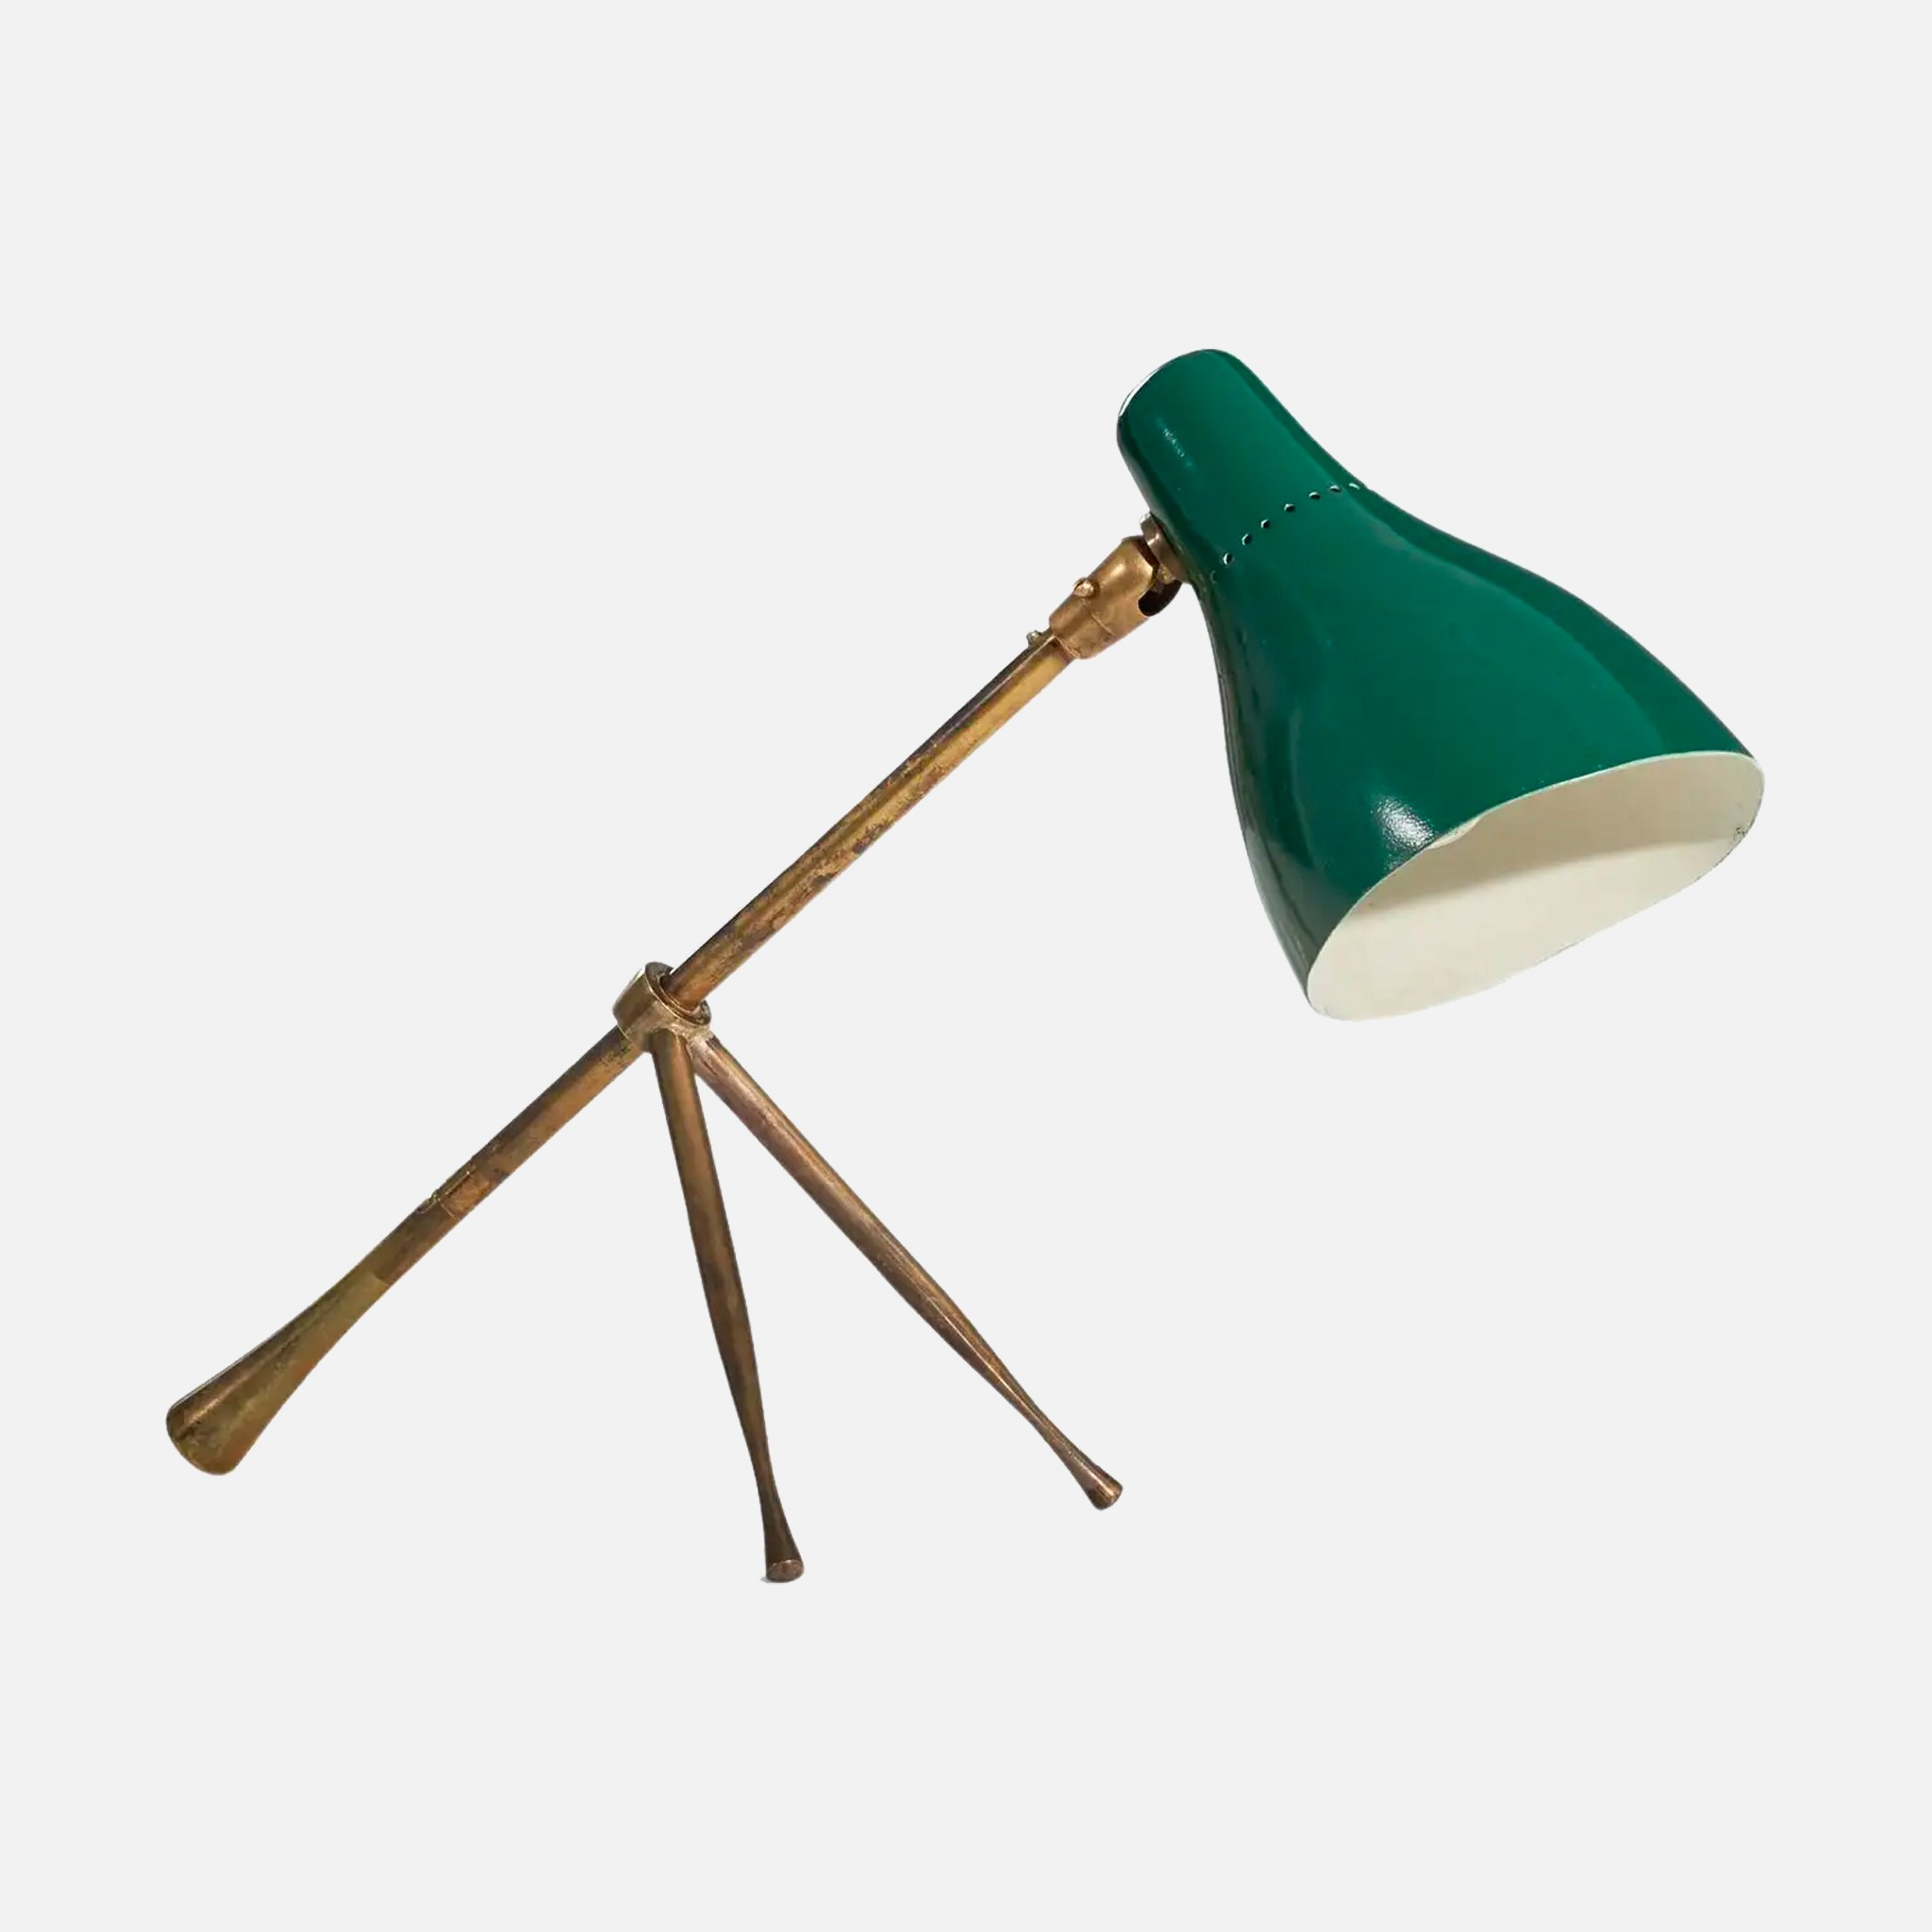 The image of an Giuseppe Ostuni 1950’s O-Luce Lamp product